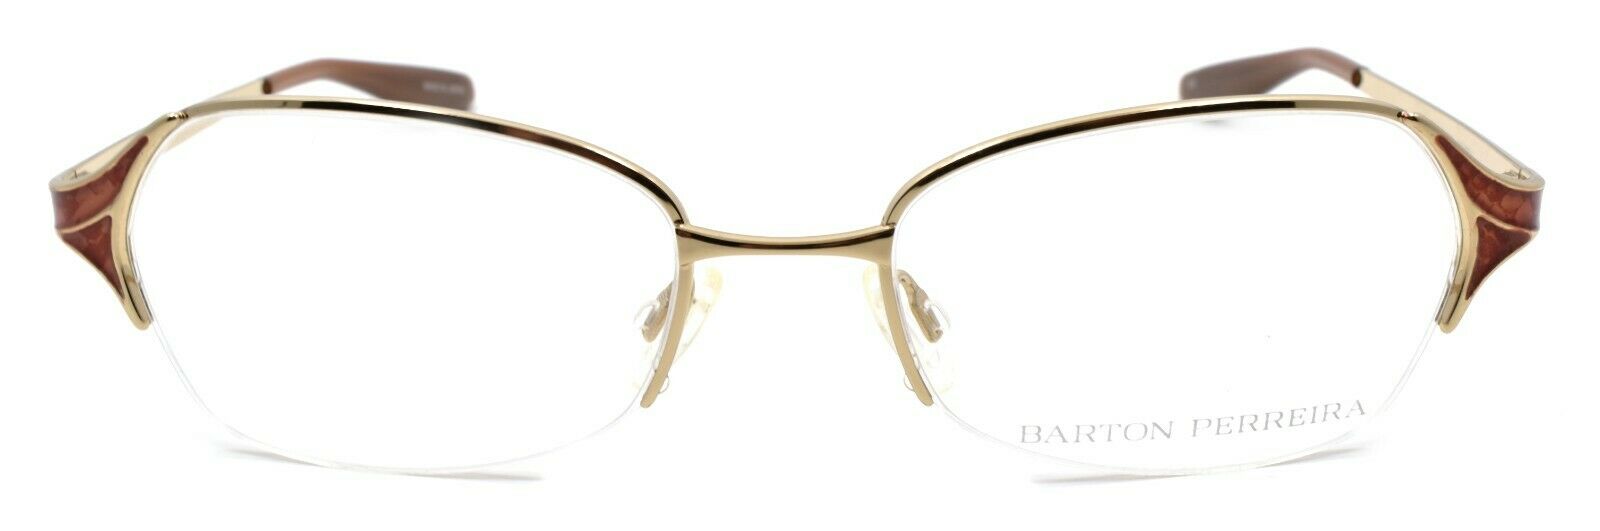 2-Barton Perreira Valera Women's Eyeglasses Frames 50-18-135 Gold / Rust Snake-672263039914-IKSpecs